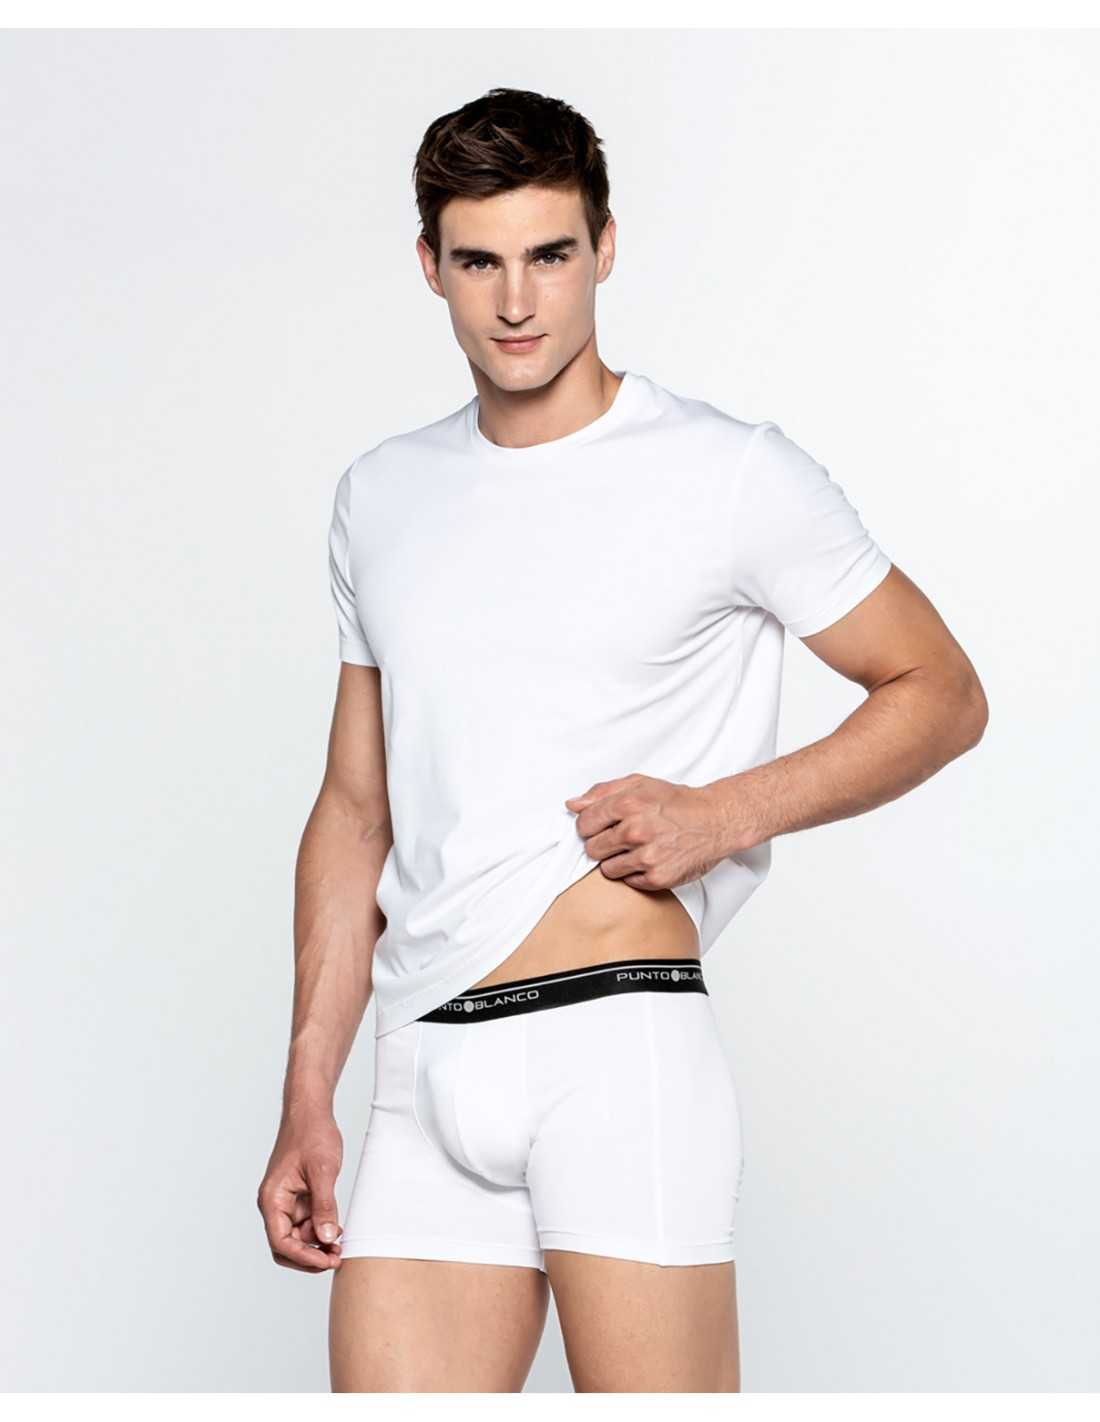 Camiseta Punto Blanco cuello redondo Ecologix TALLAS: s, m, l, xl; COLOR: blanco, negro Composición: algodón - HOMBRE 